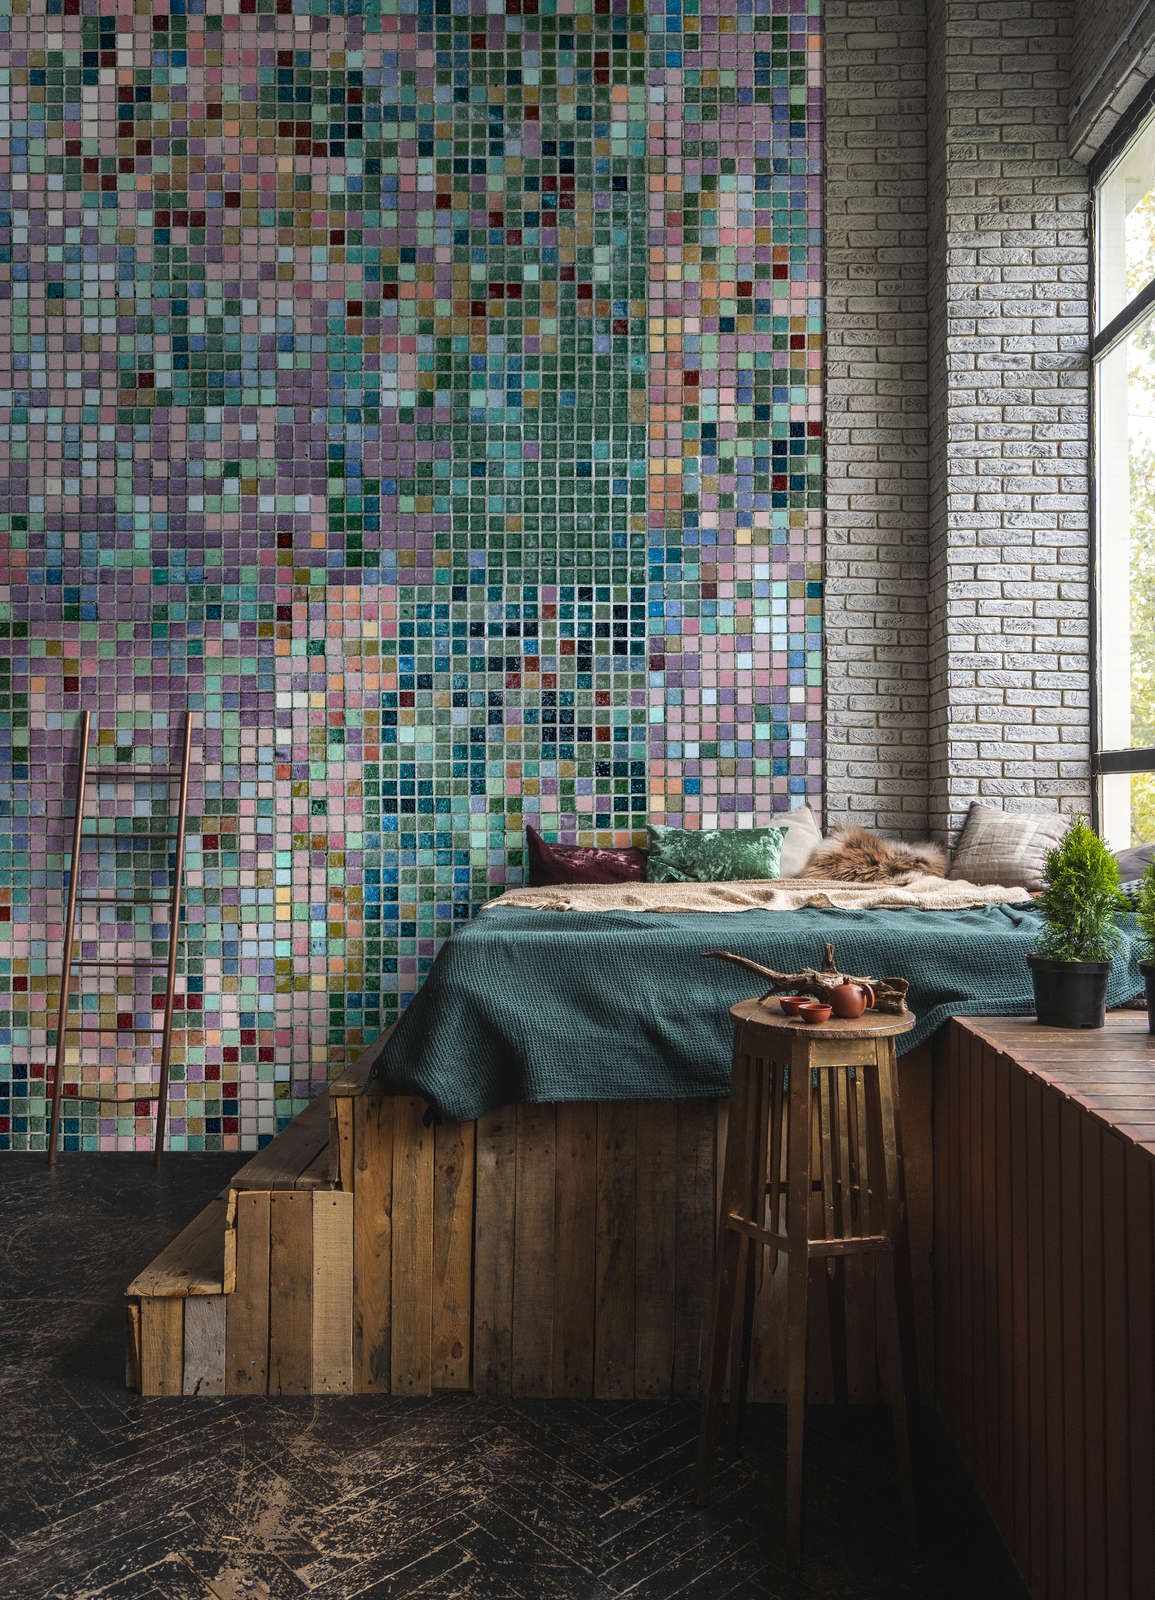             Fotomural »grand central« - Motivo de mosaico en colores vivos - Material no tejido de textura ligera
        